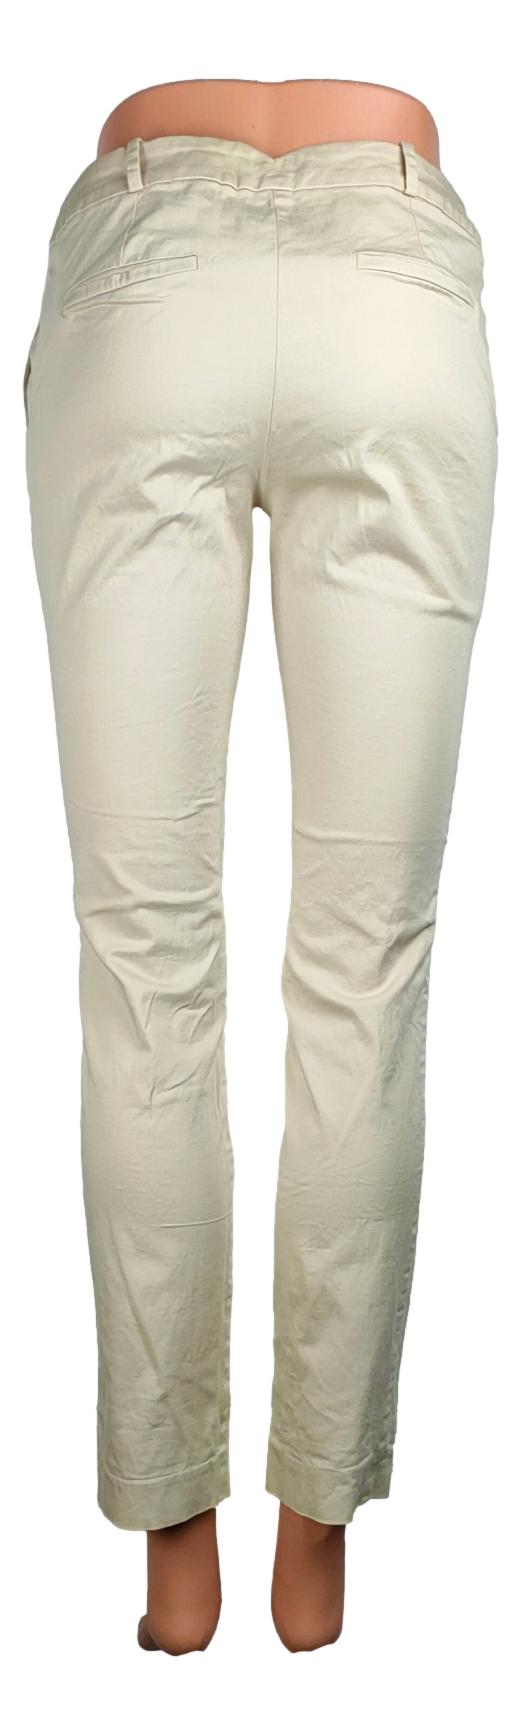 Pantalon Promod - taille 36